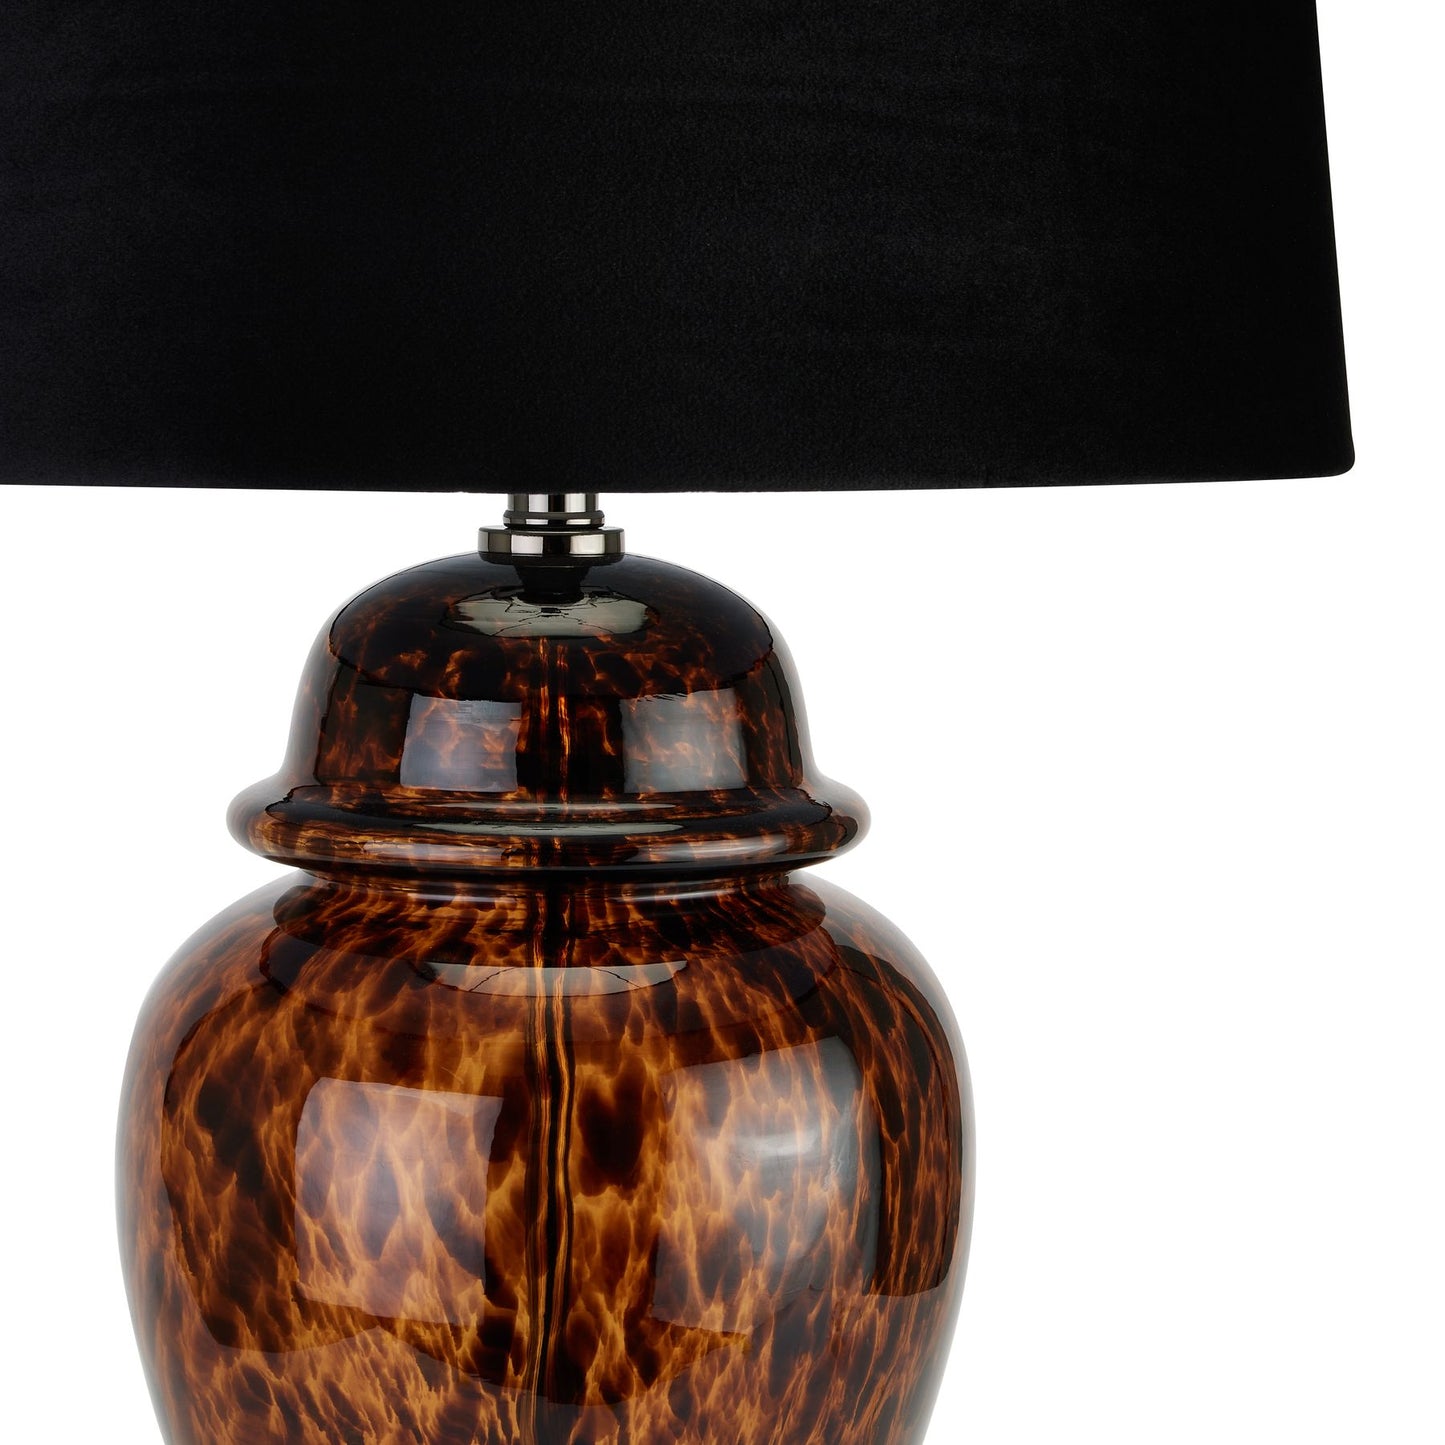 Jacobean Glass Table Lamp